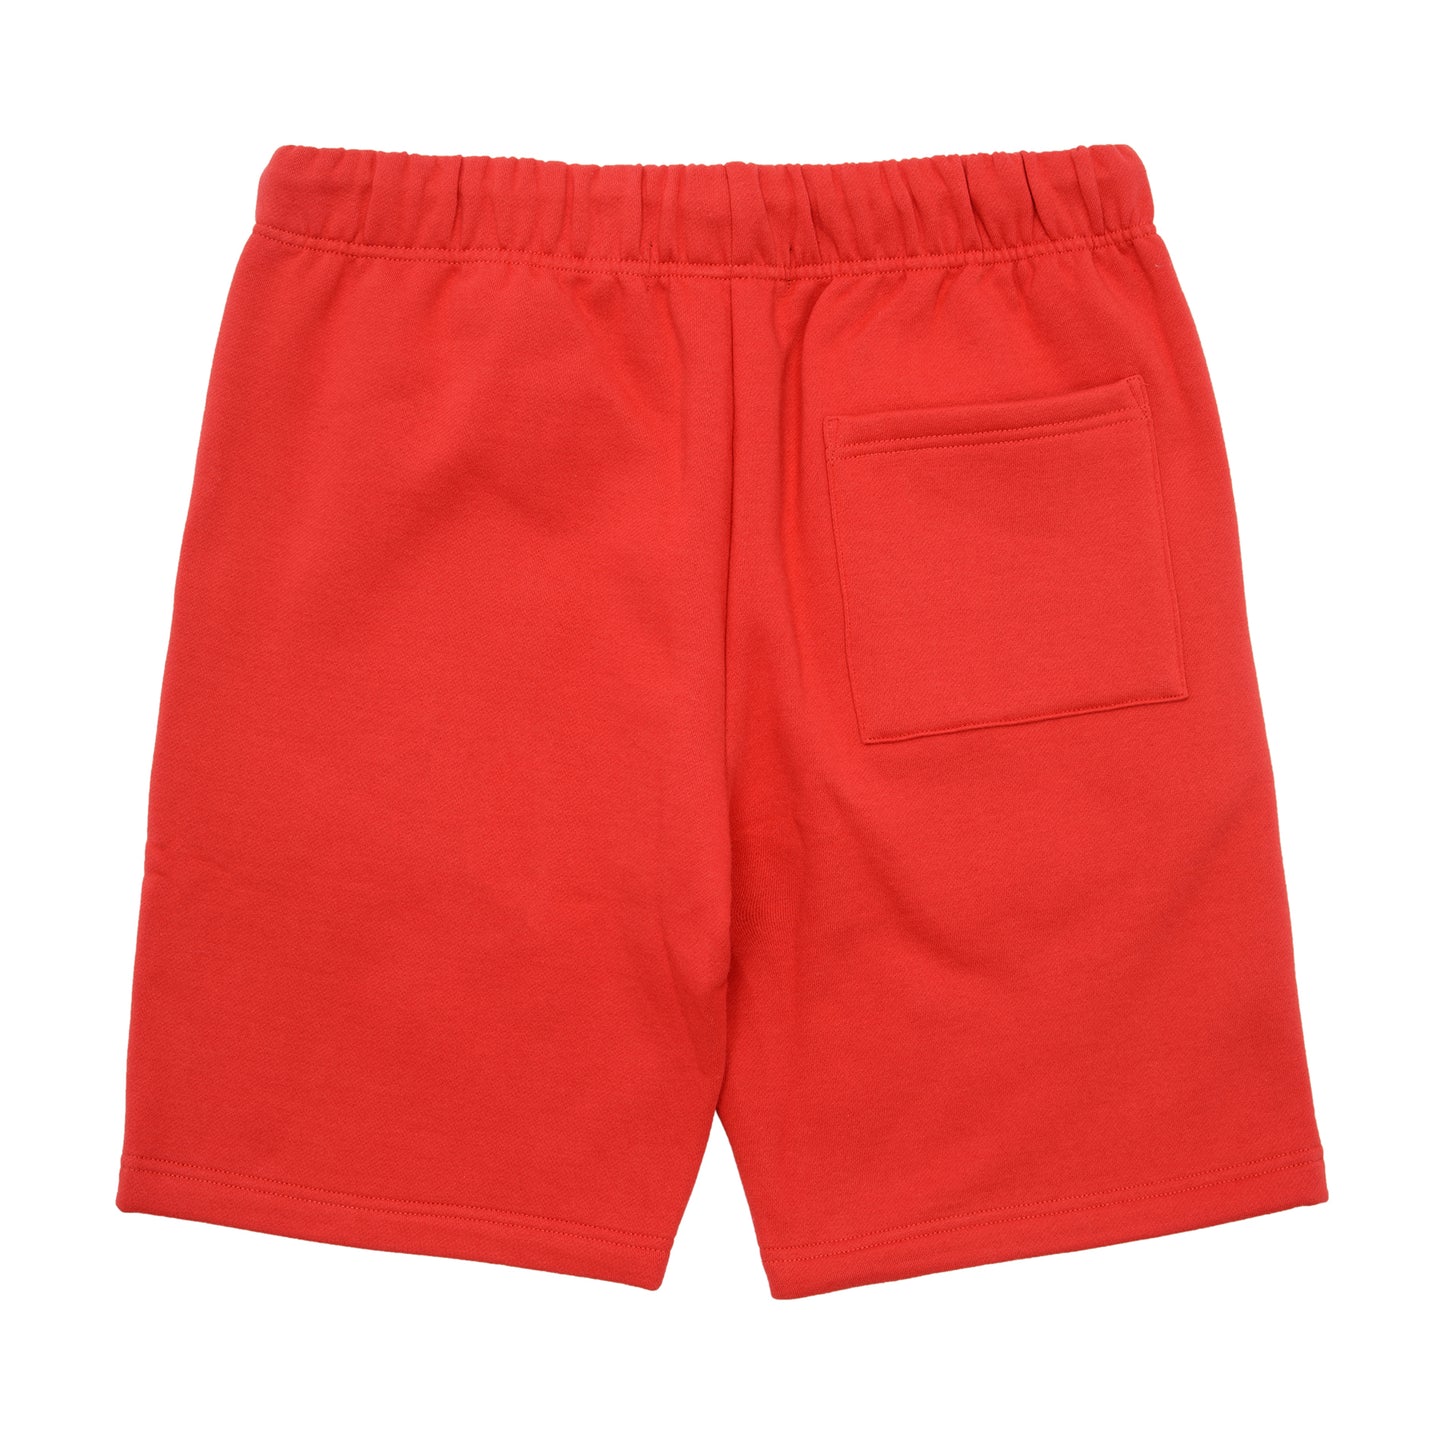 Dragon Rhinestone Shorts - Red